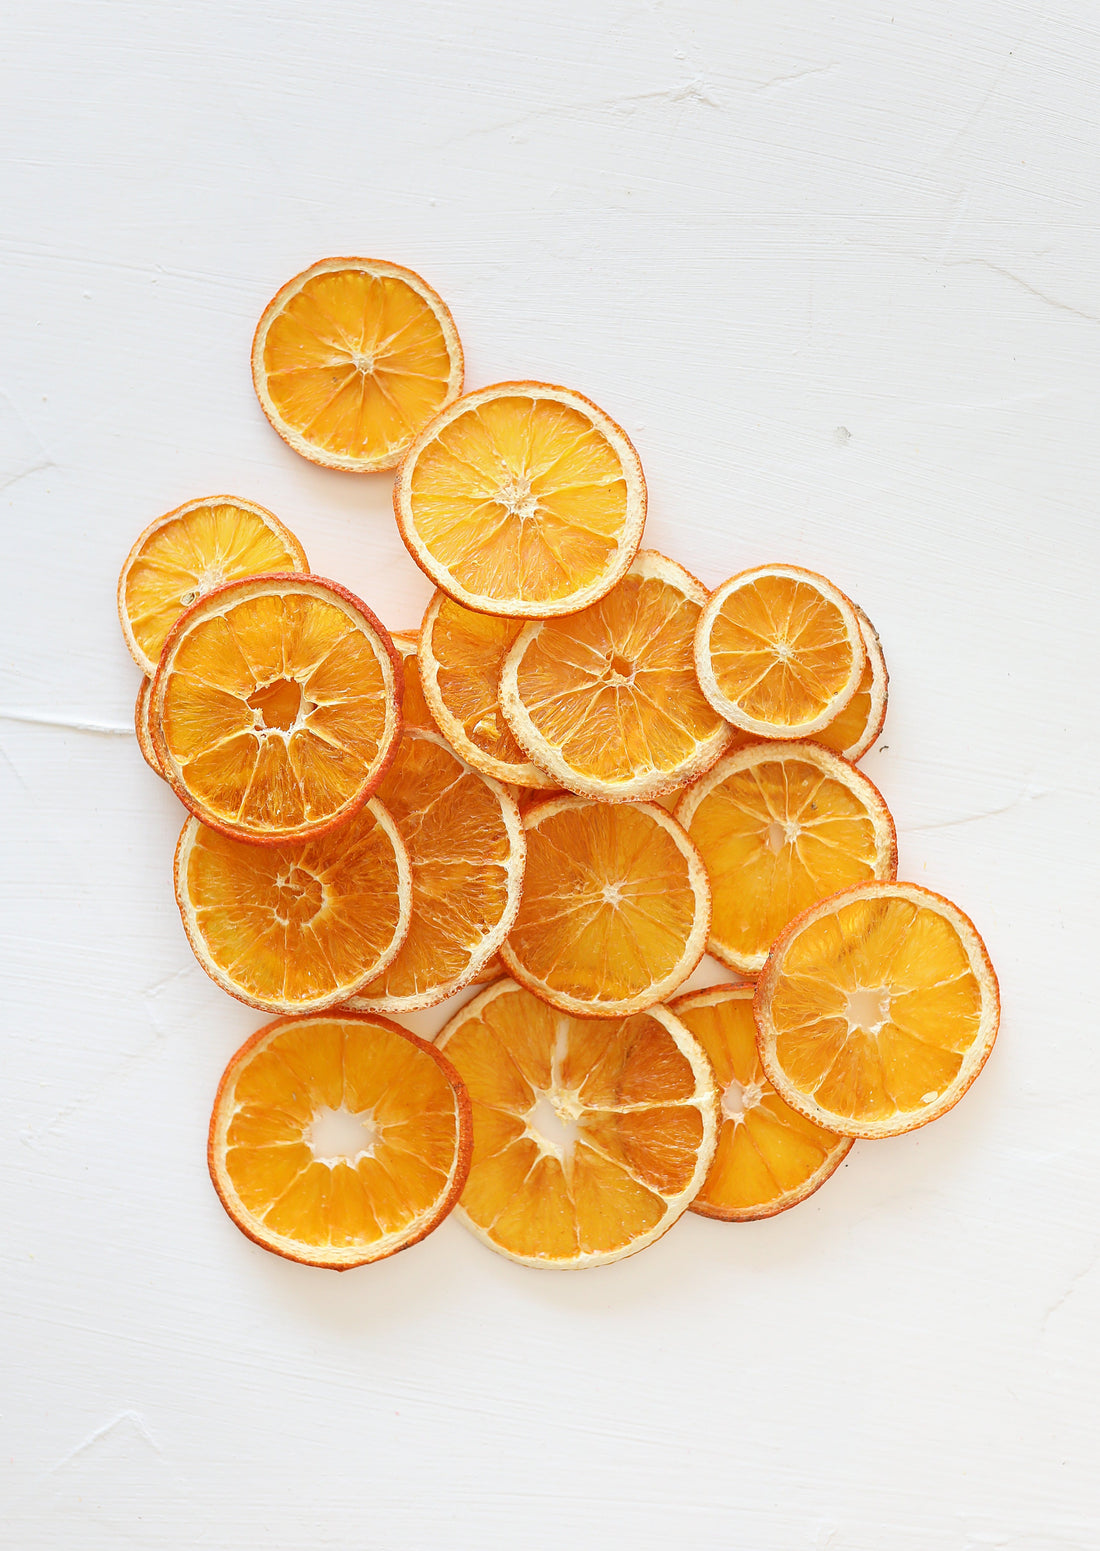 Preserved Orange Slices